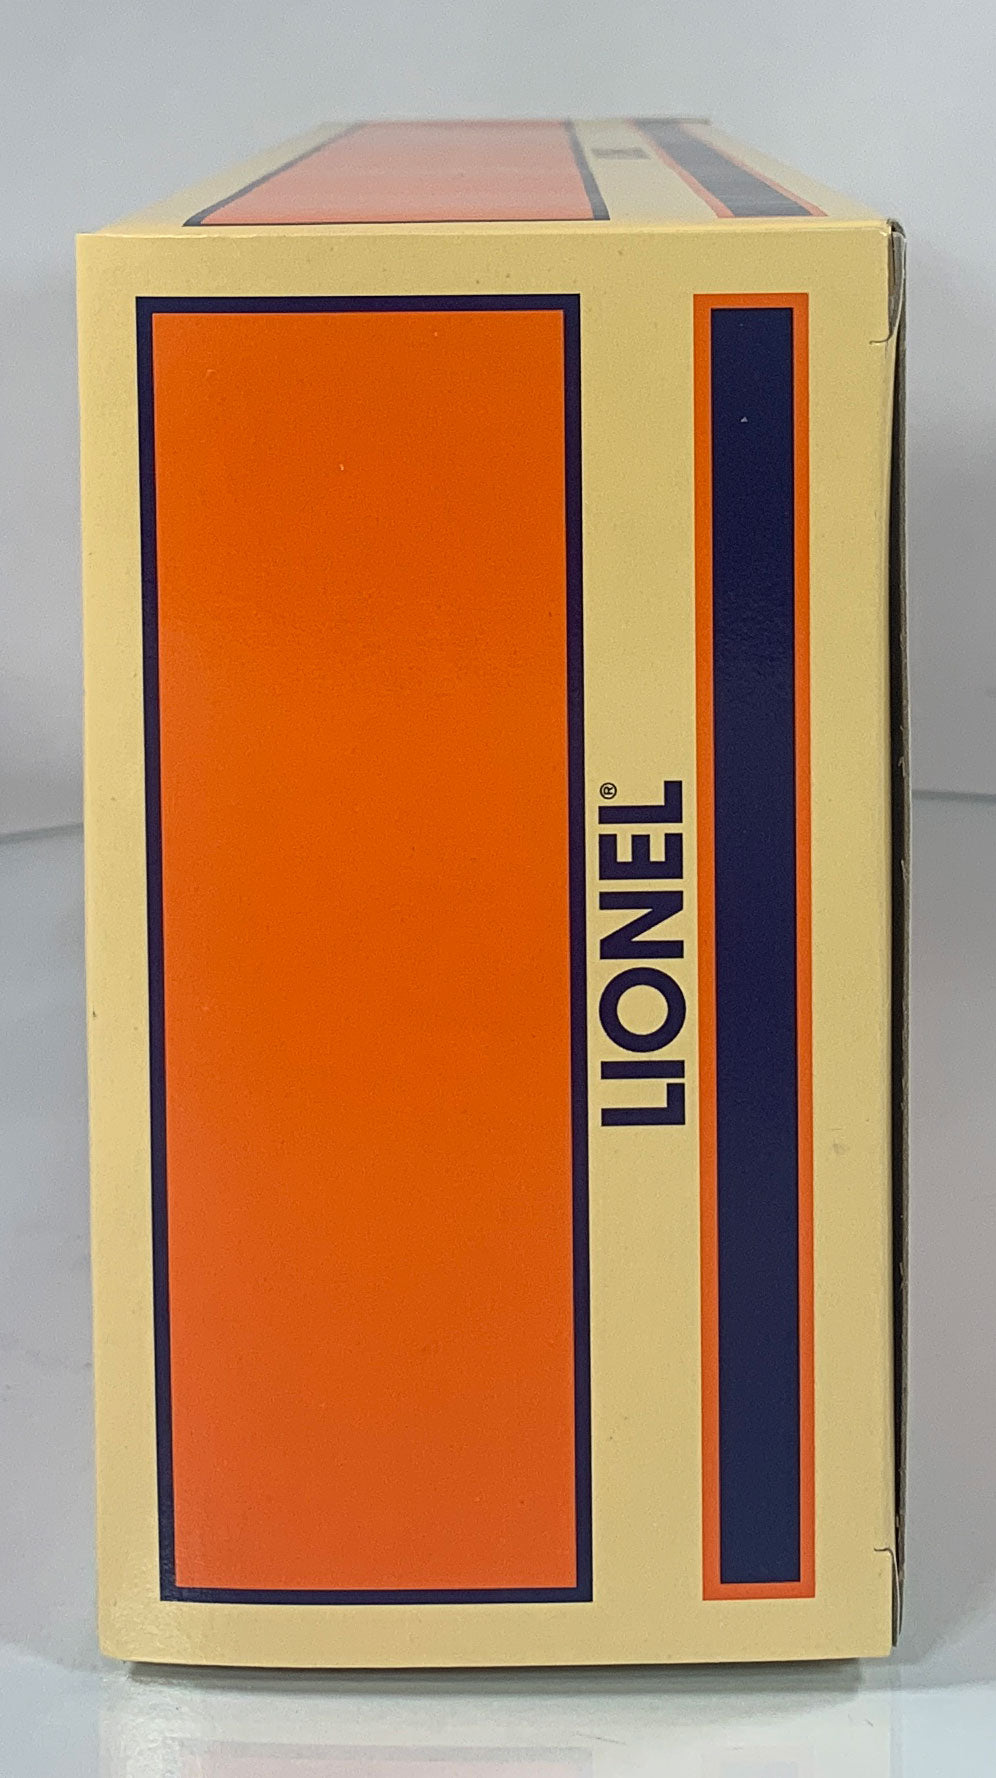 LIONEL • O GAUGE • 1998 Lionel Online Boxcar 6-26264 • NEW OLD STOCK